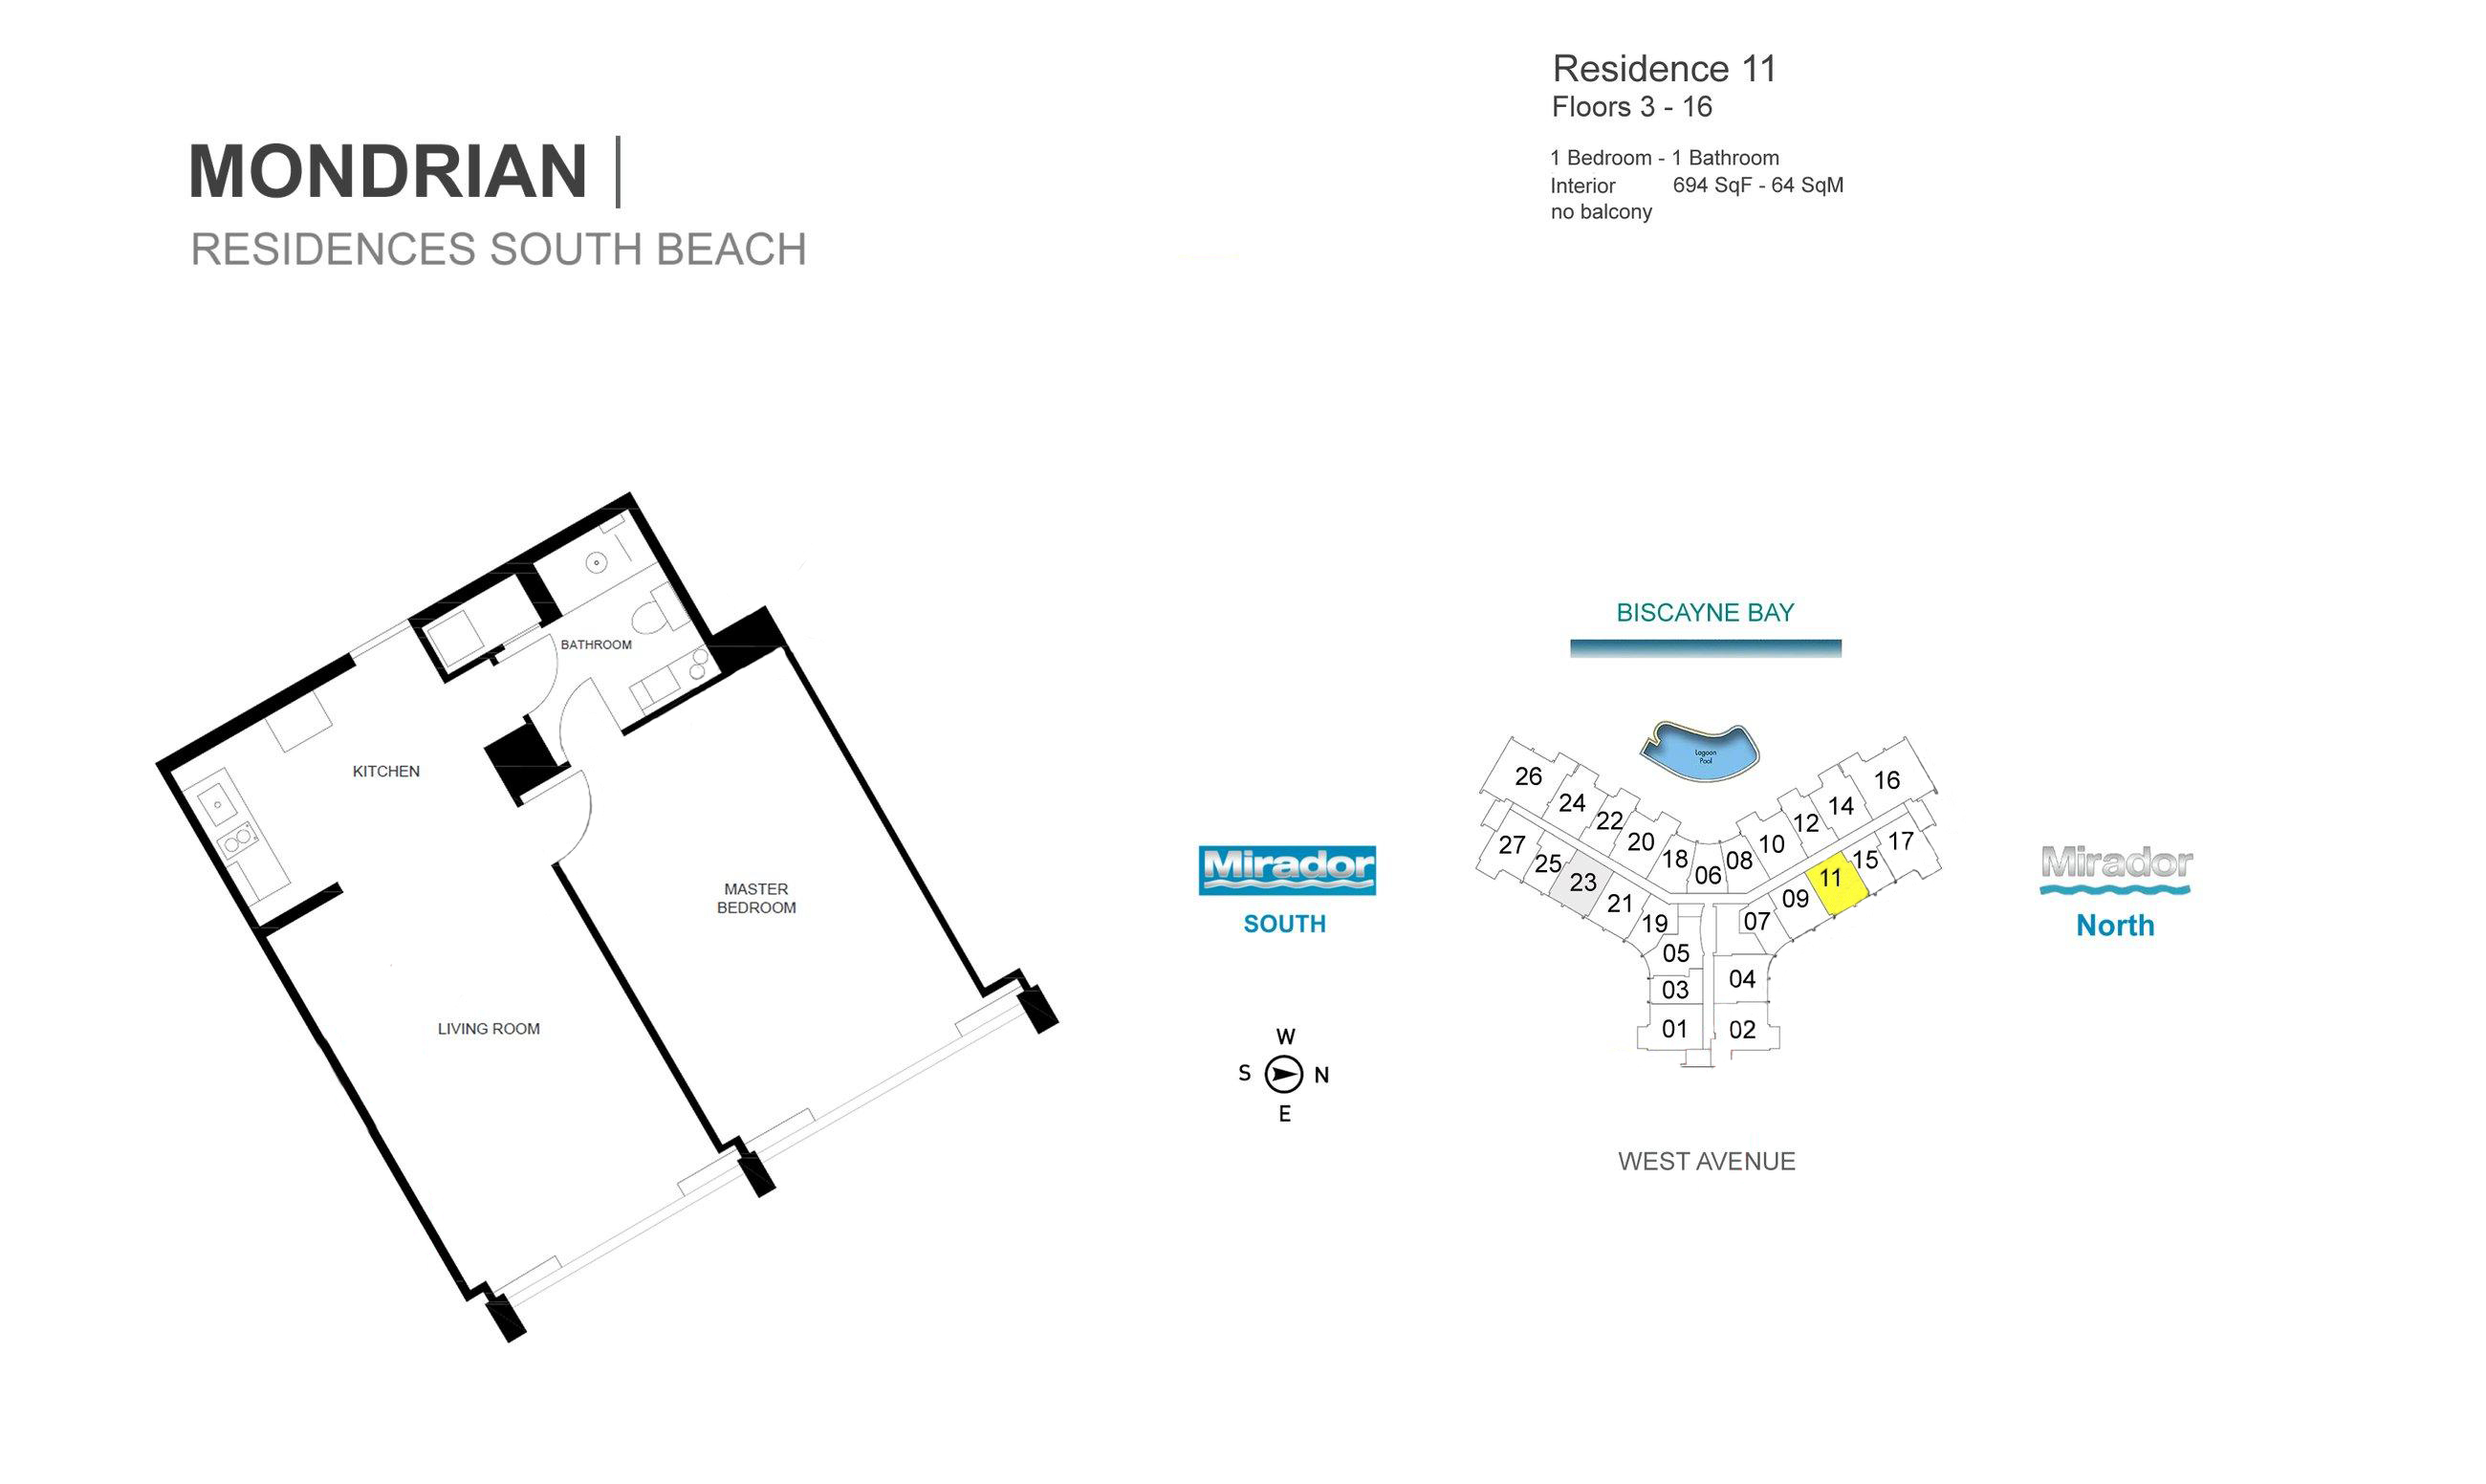 Mondrian South Beach Residence 11